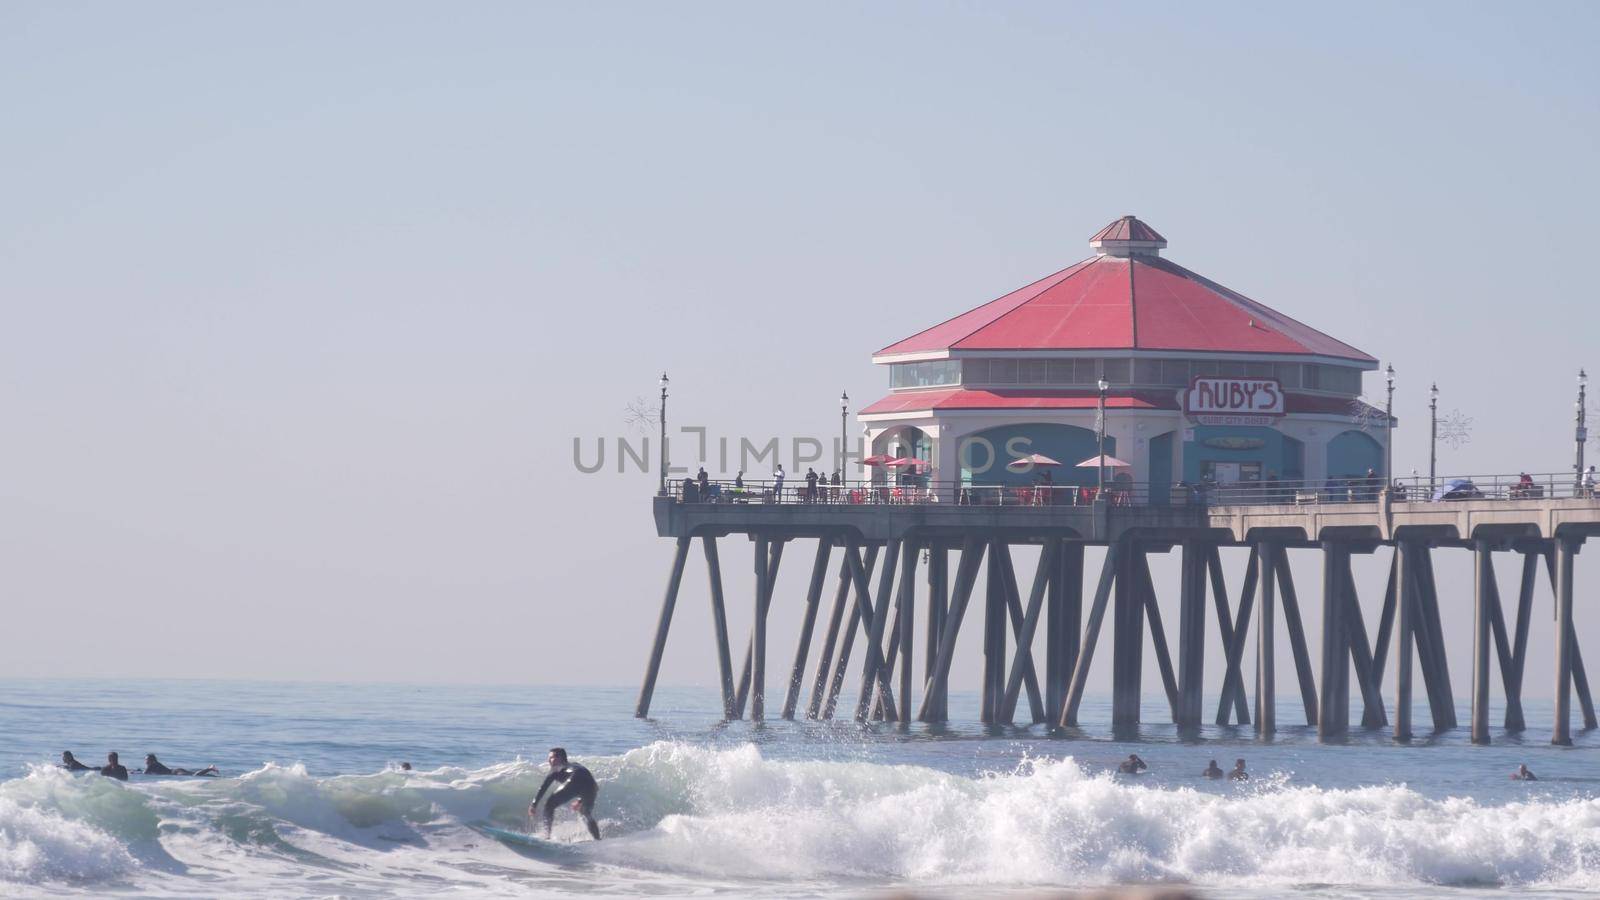 People surfing in ocean waves, Huntington Beach pier, California coast, USA. by DogoraSun